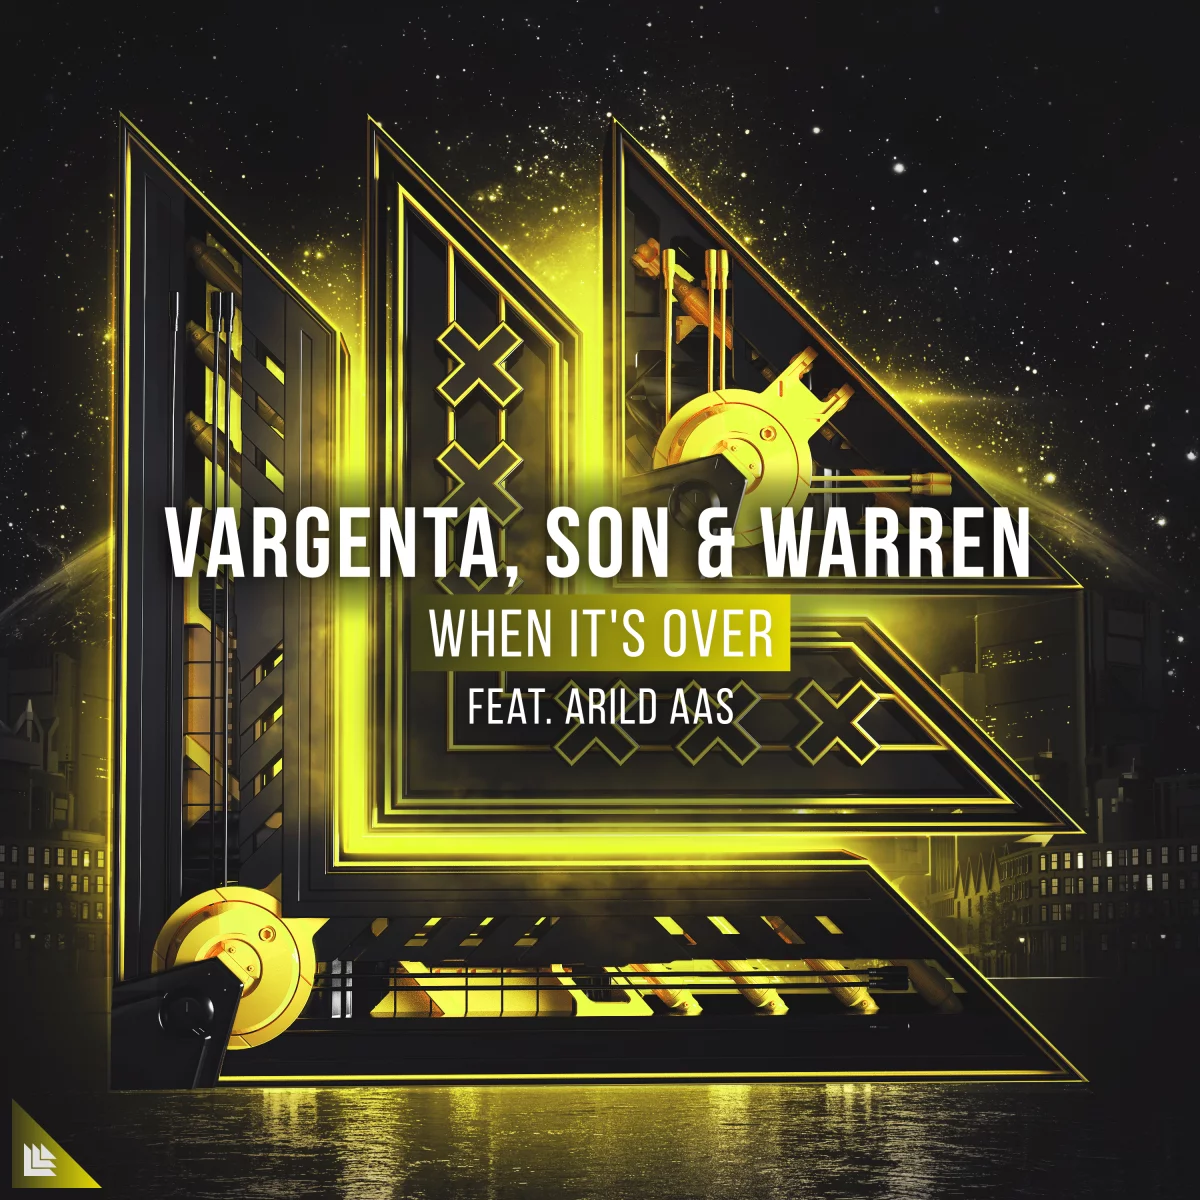 When It's Over - VARGENTA⁠ SON⁠ Warren⁠ feat Arild Aas⁠ 